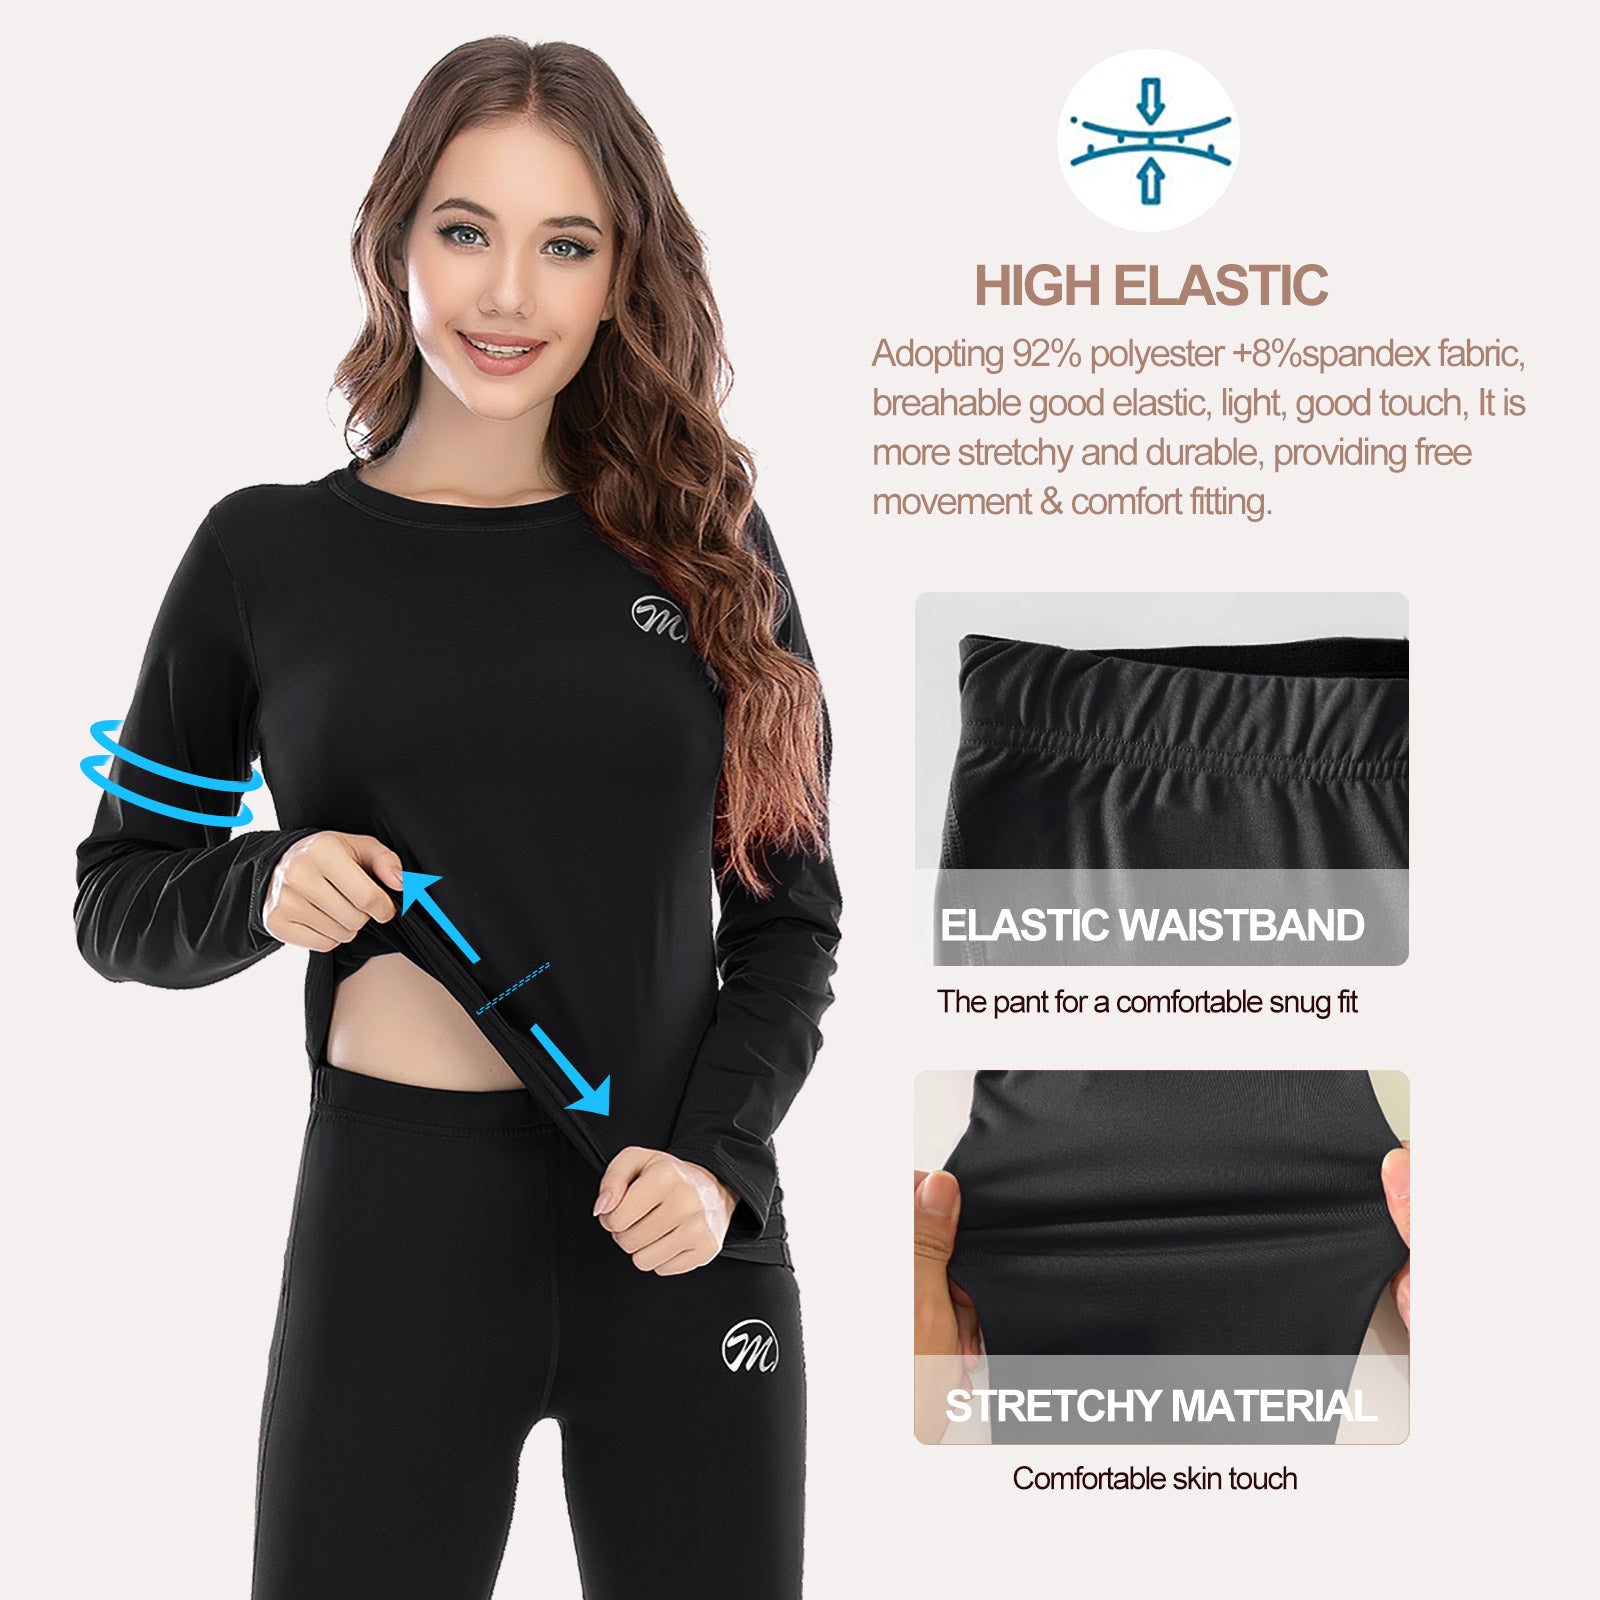 MEETWEE Thermal Underwear for Women, Winter Warm Base Layer Top